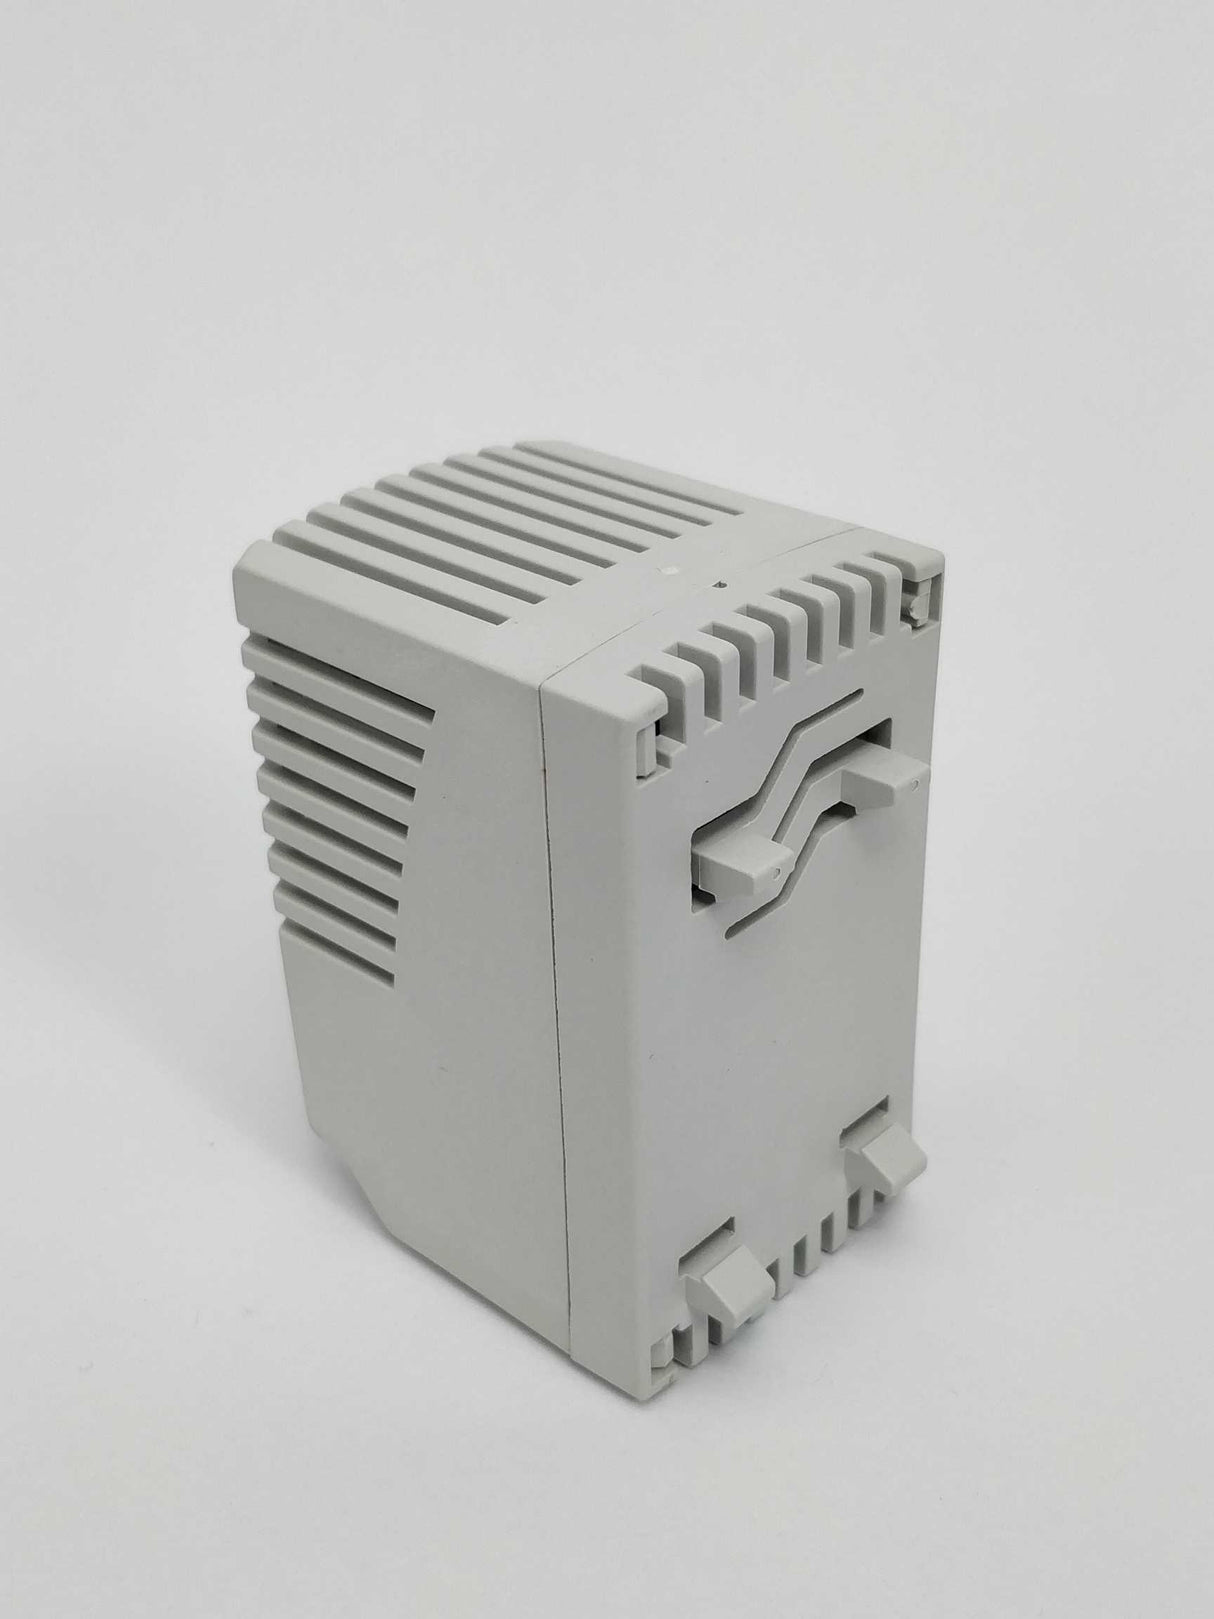 Häwa 3150-0060-02-30 Temperature controller